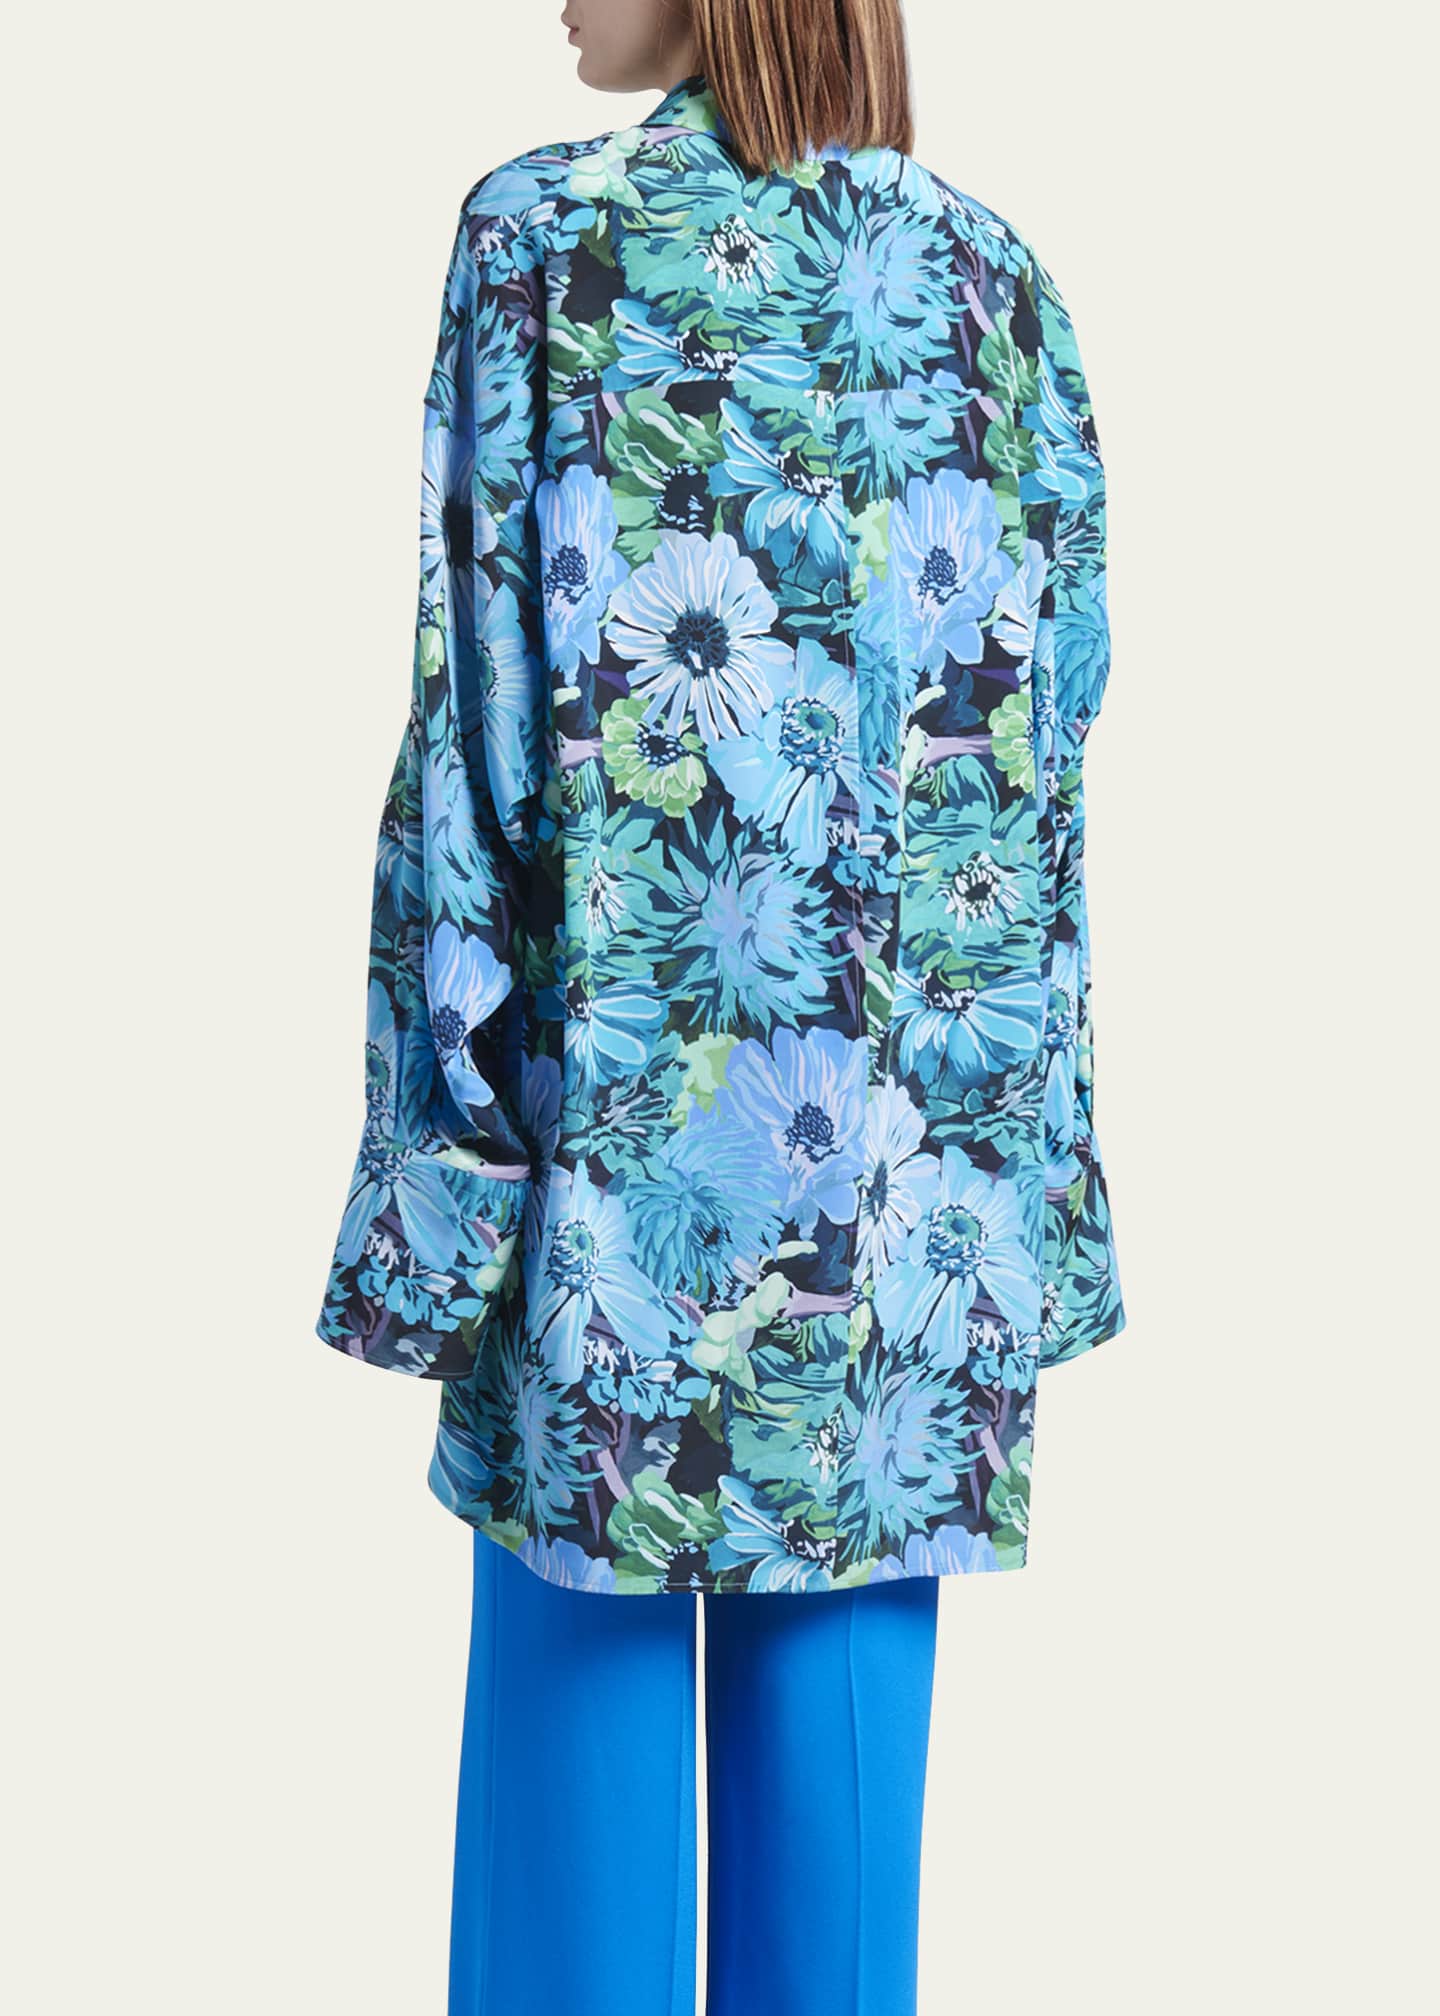 Stella McCartney Flower-Print Oversized Silk Blouse - Bergdorf Goodman